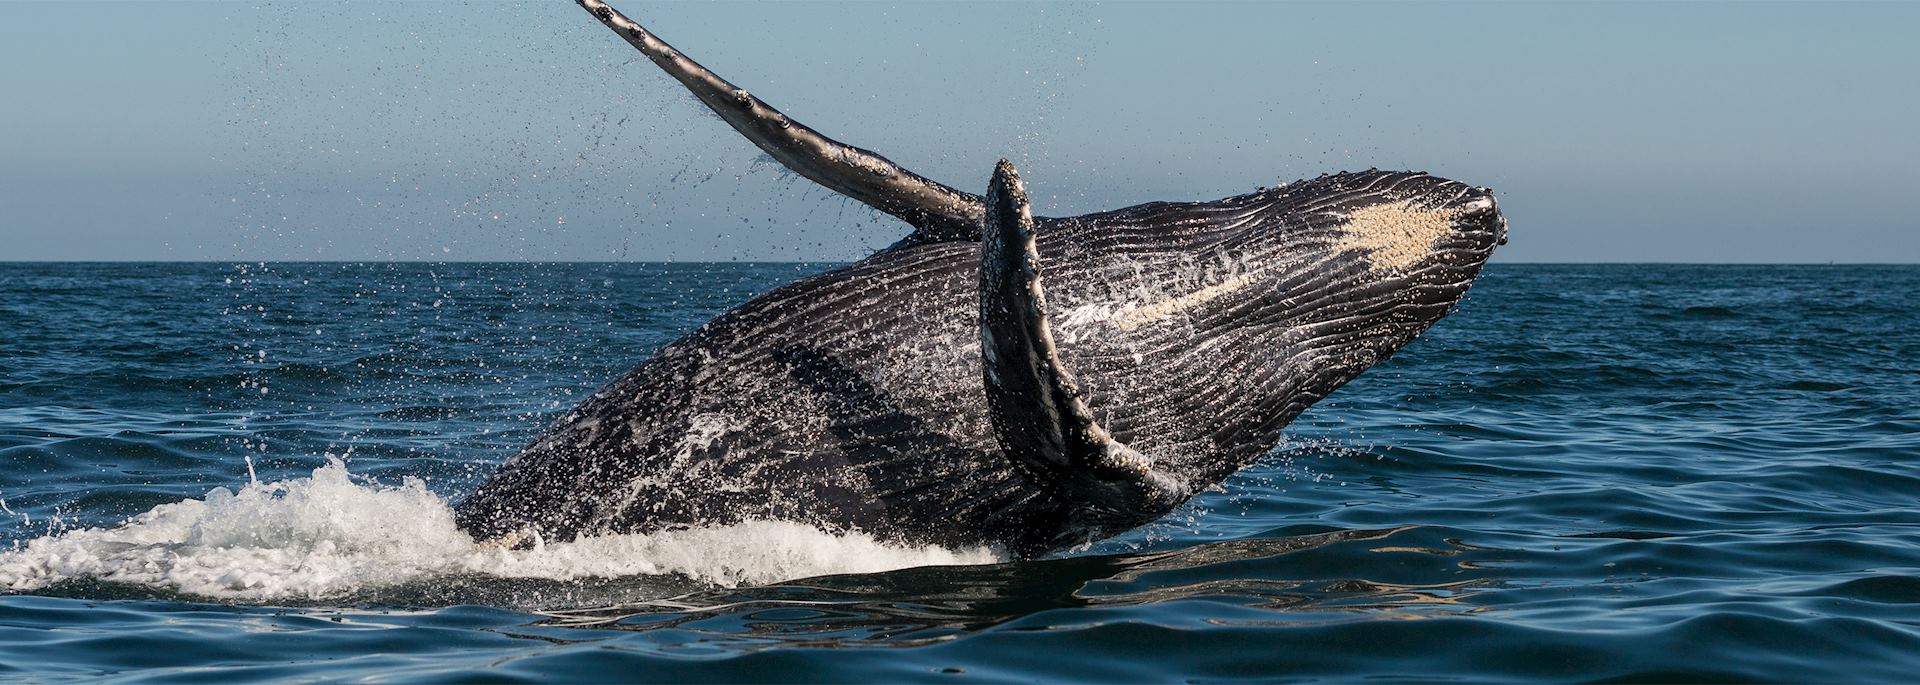 Humpback whale, Vancouver Island